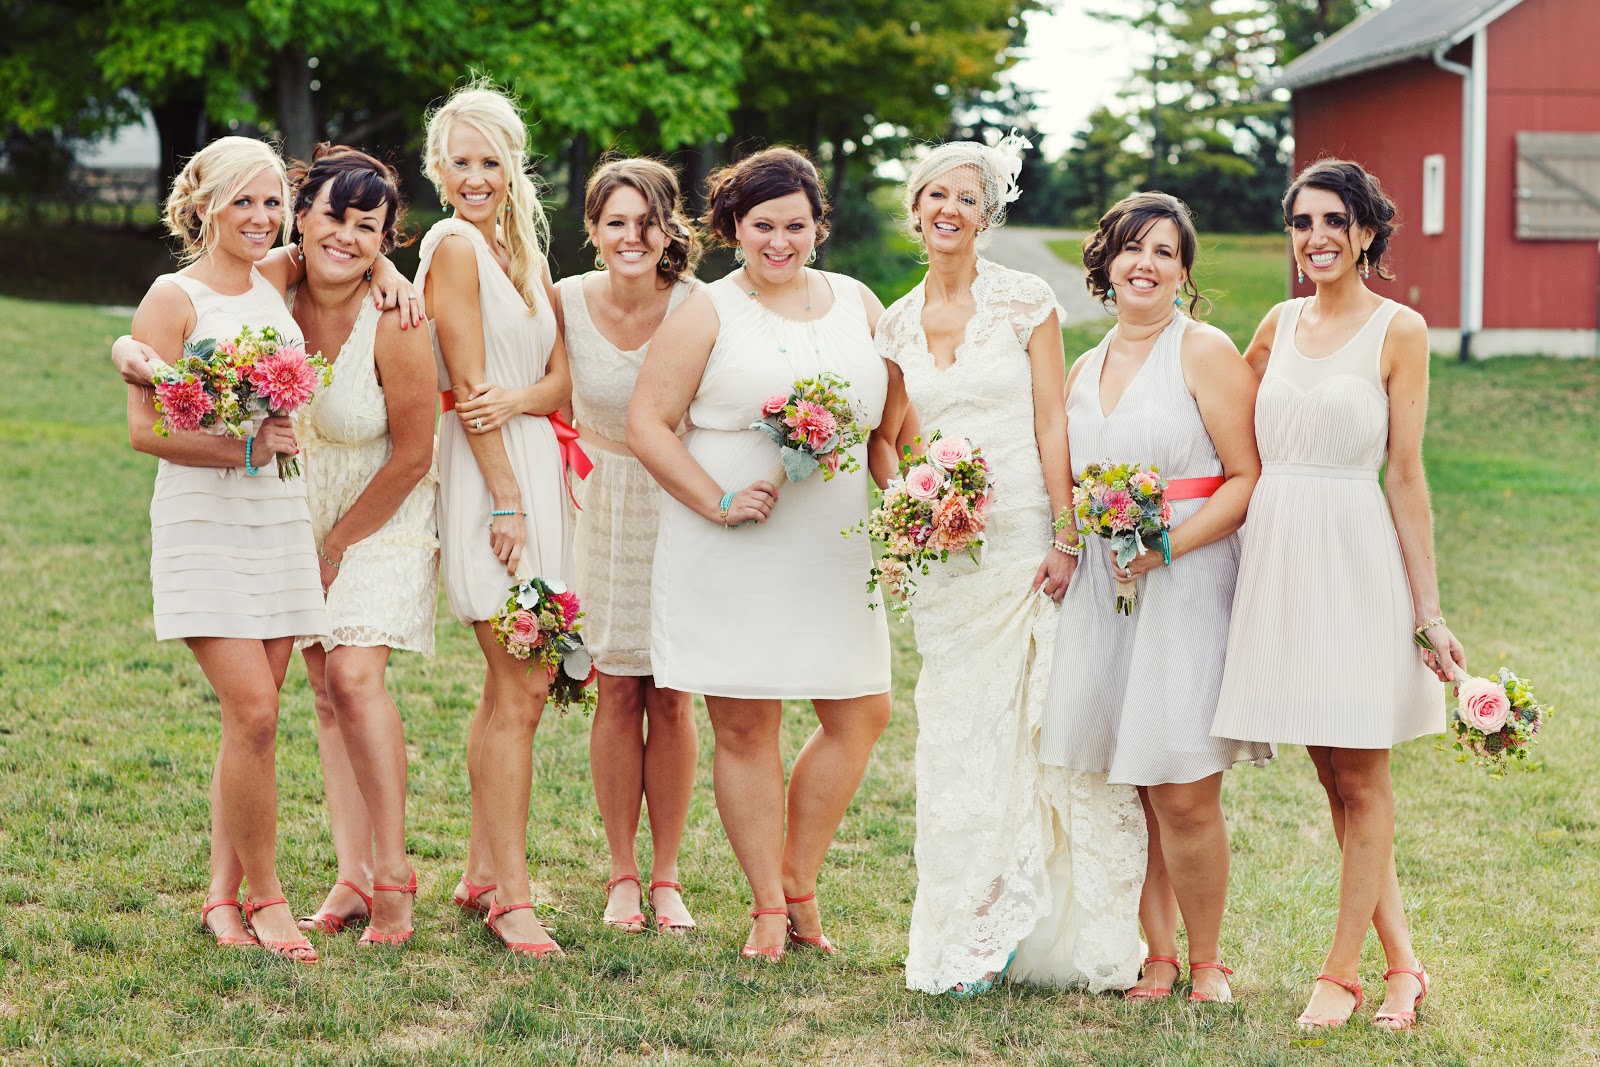 Choosing The Right Bridesmaid Dresses